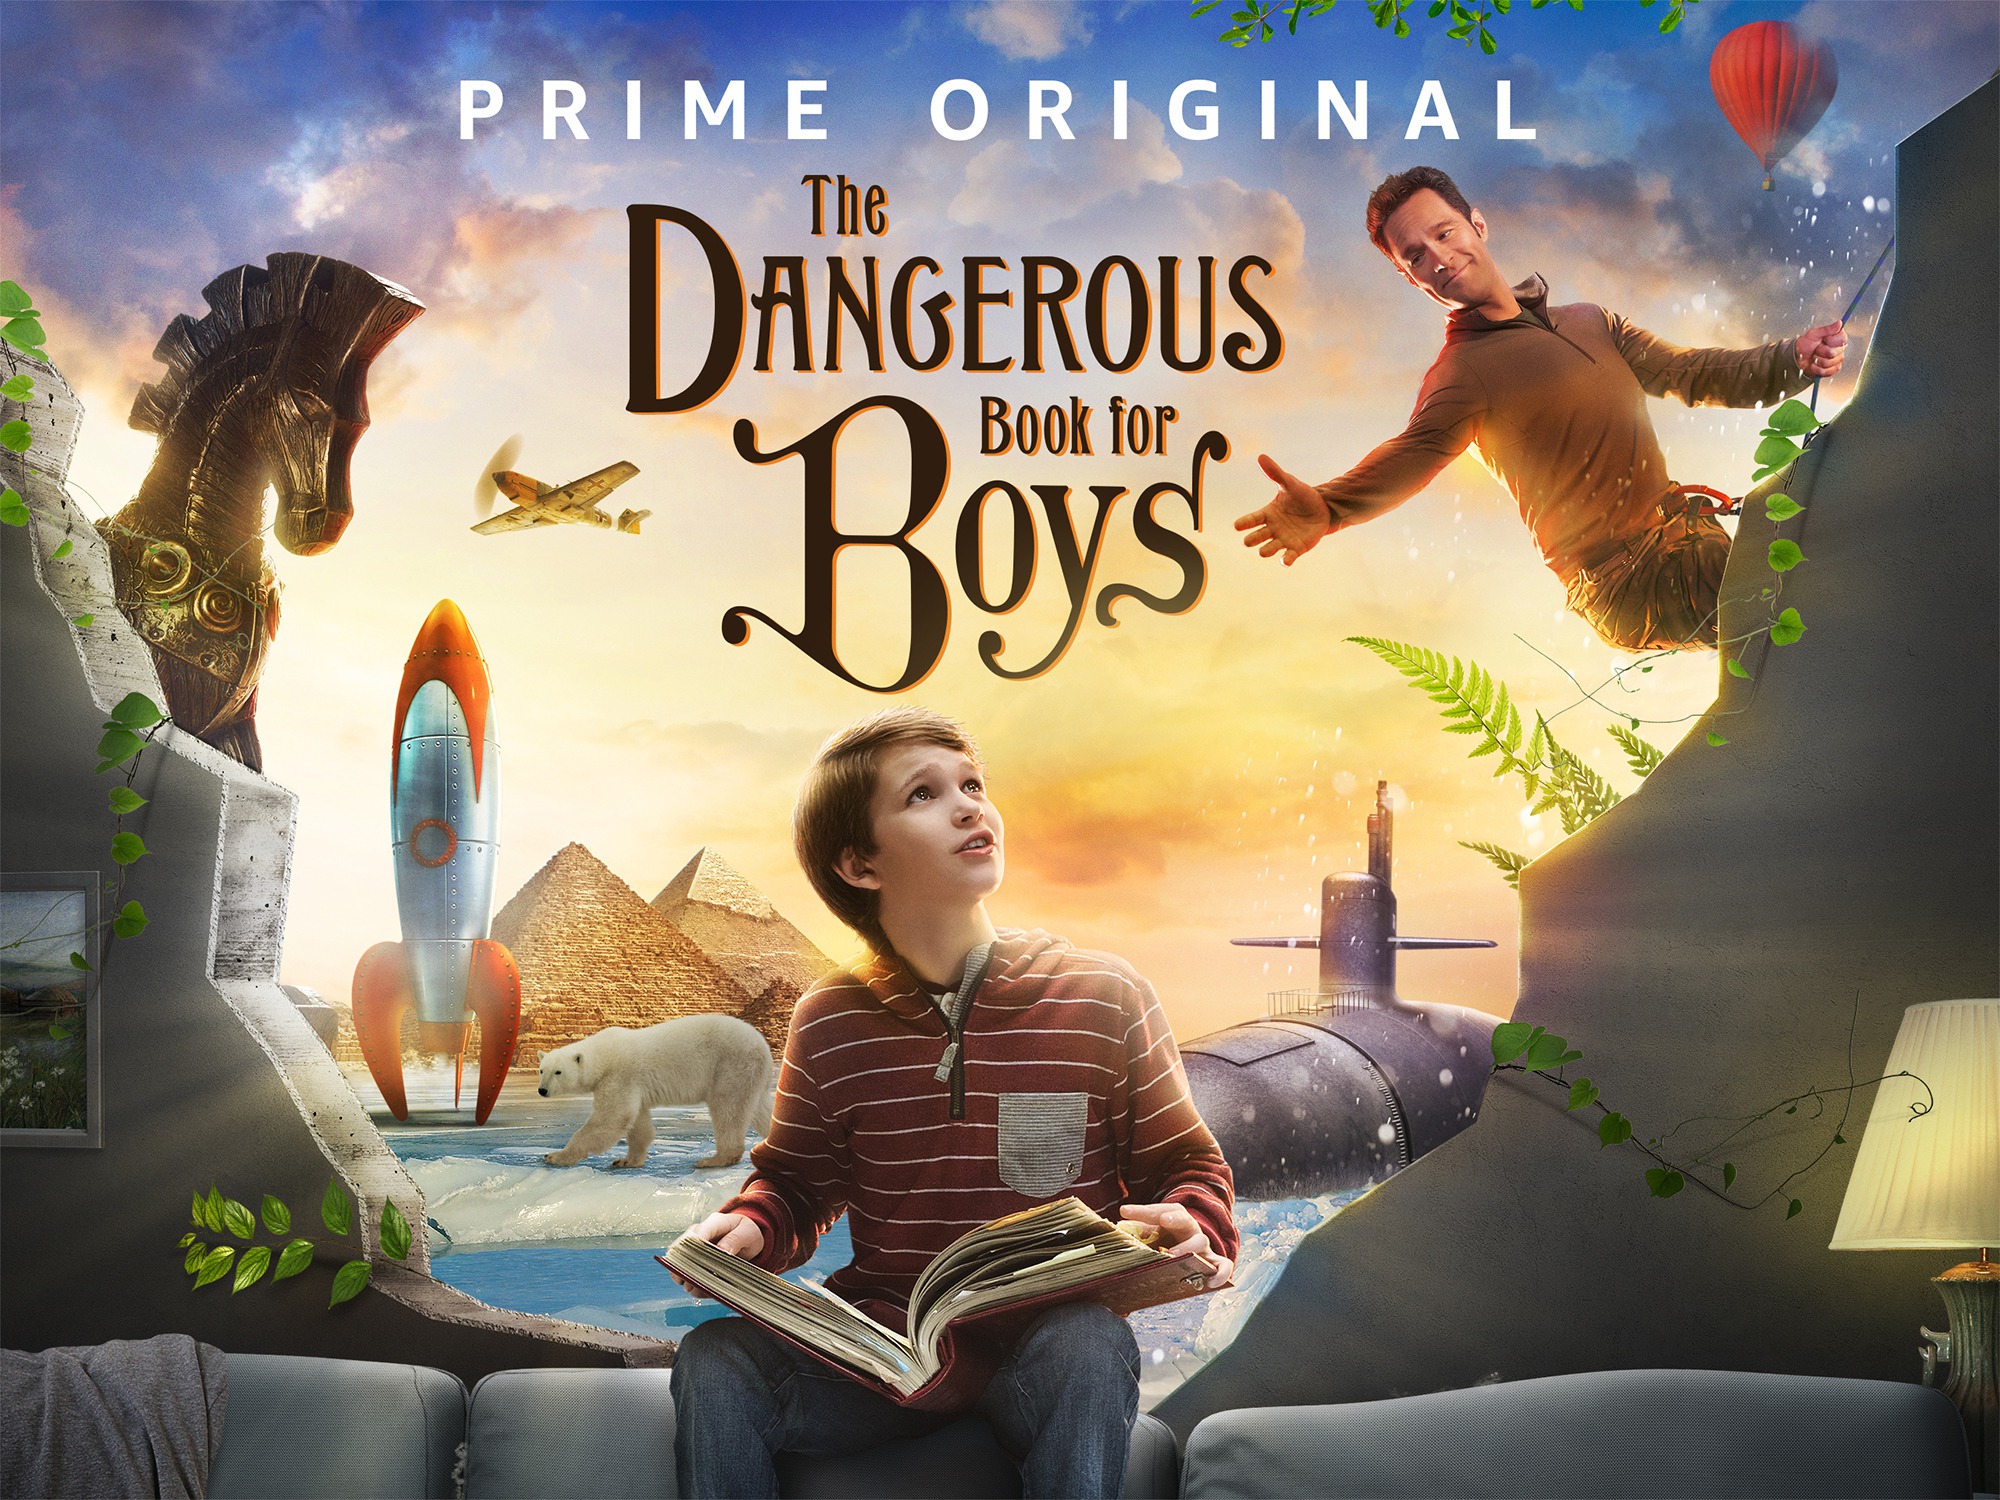 Mega Sized TV Poster Image for The Dangerous Book for Boys (#2 of 2)